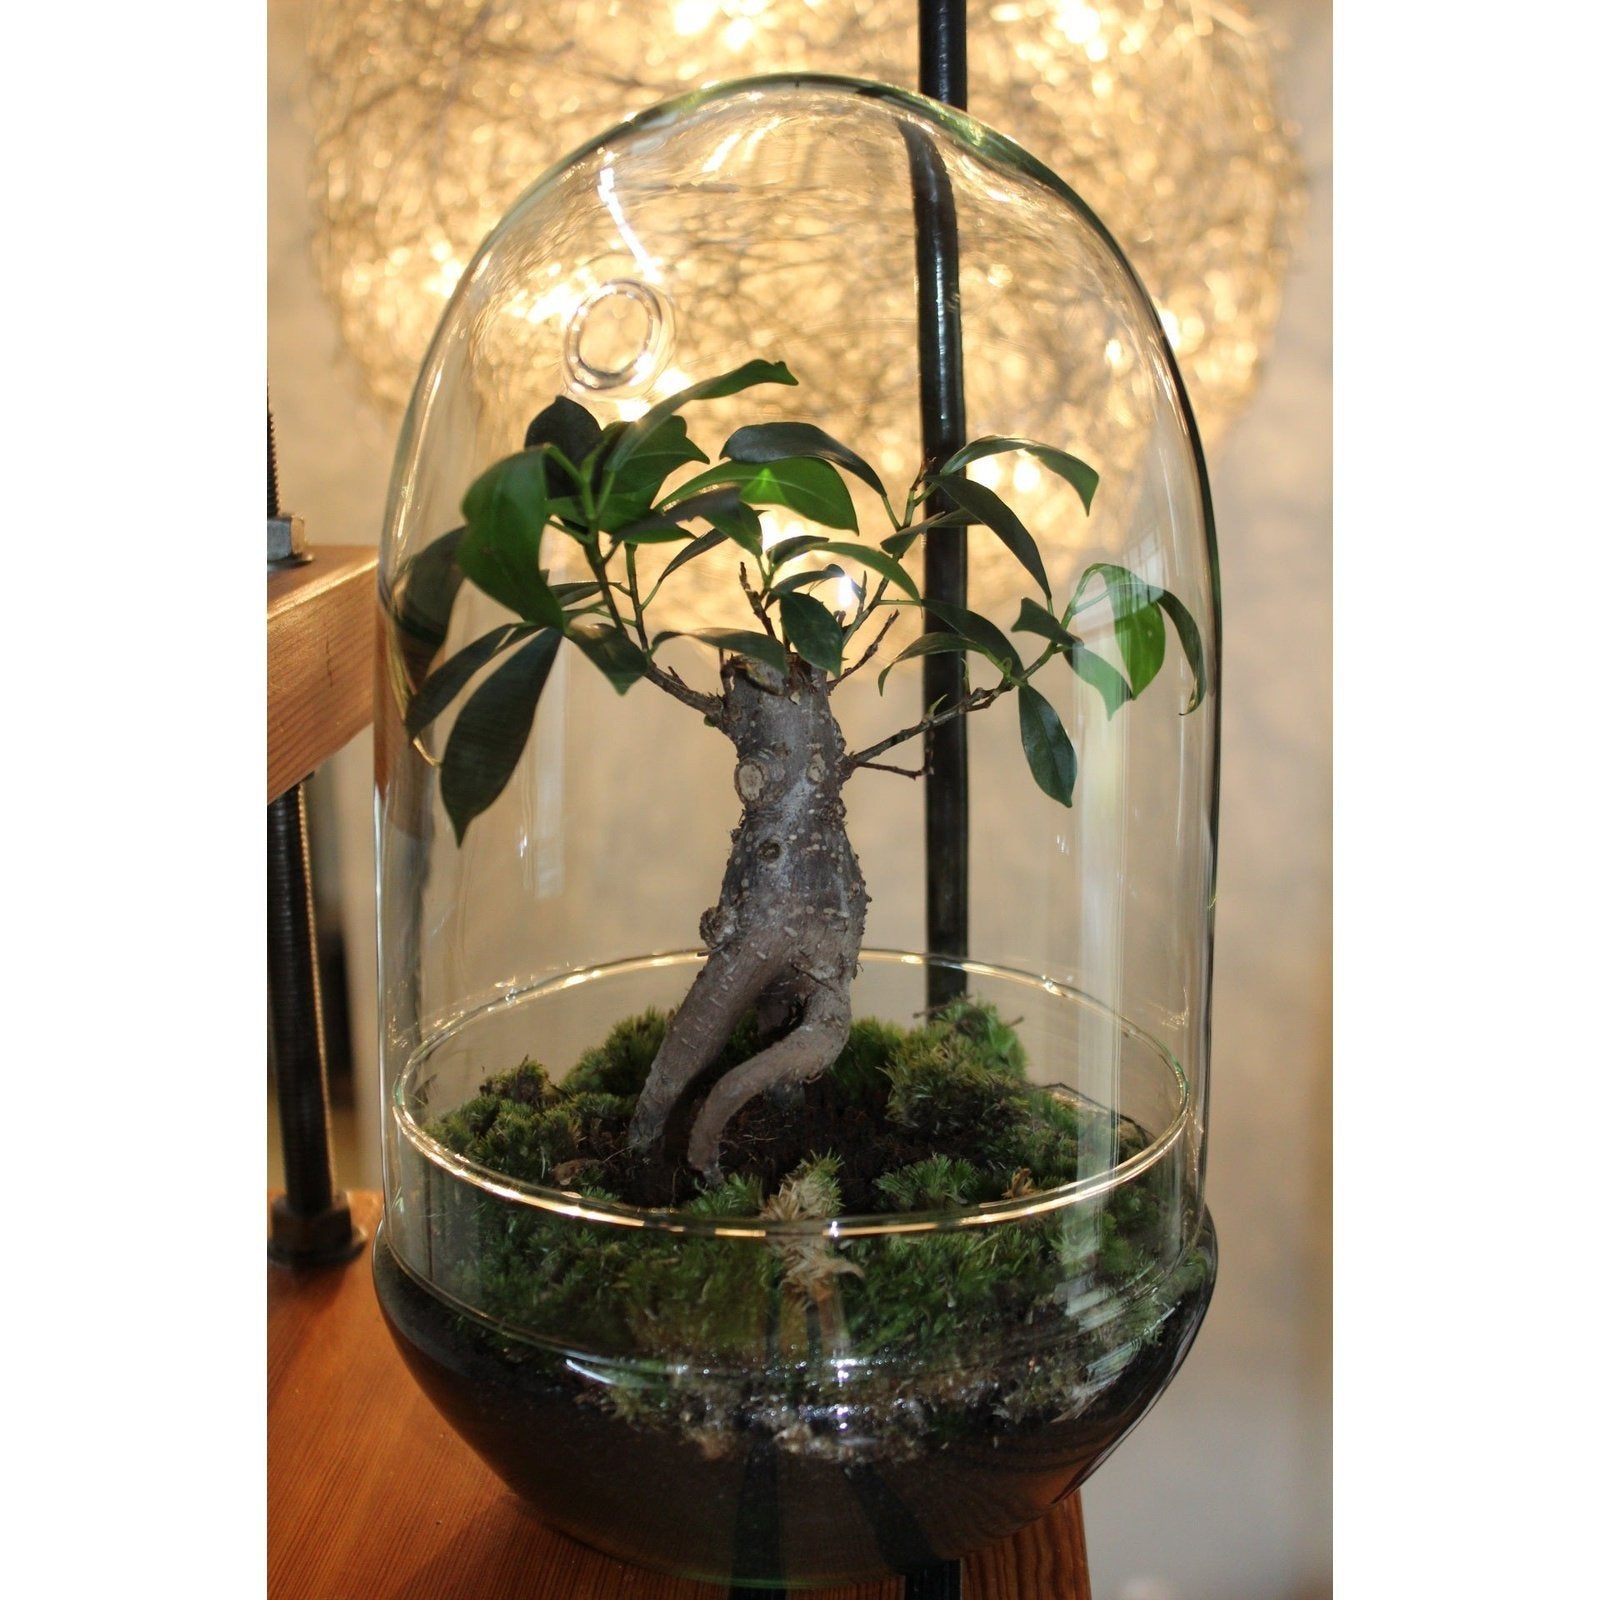 Growing Concepts DIY Duurzaam Ecosysteem Egg Large Ficus Ginseng - H30xØ18cm